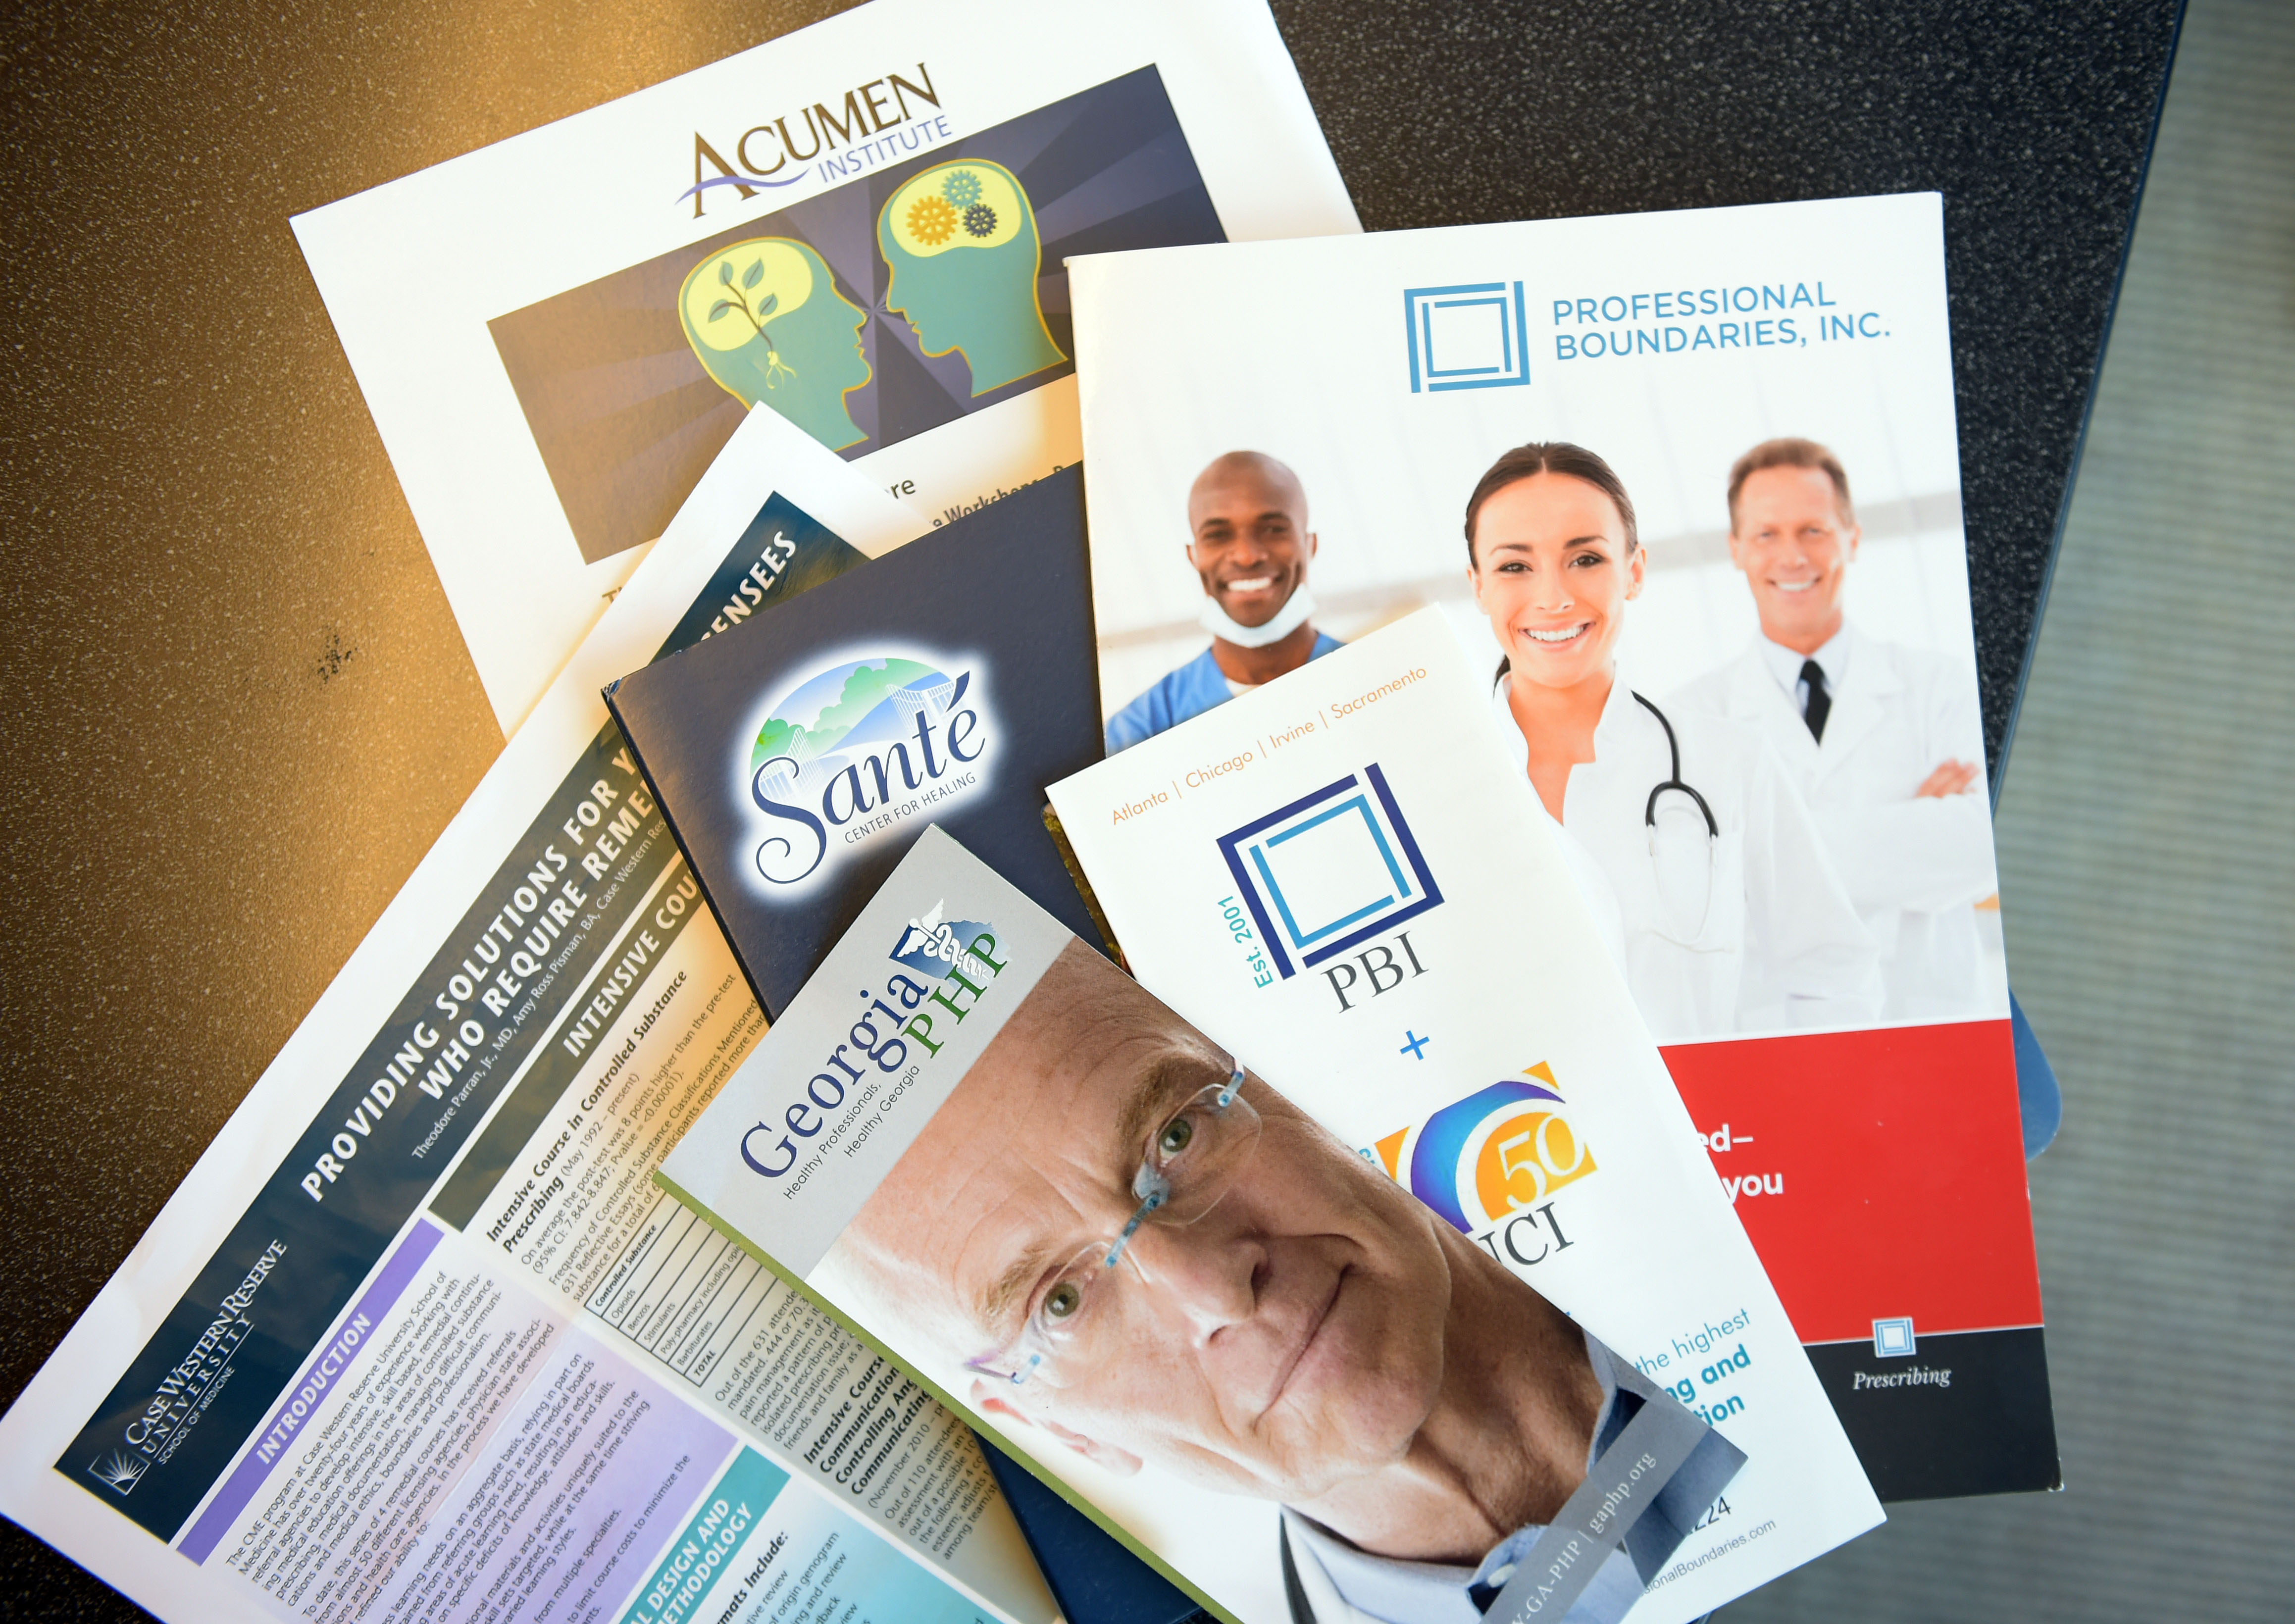 August 12, 2016 DUNWOODY photos of marketing brochures for treatment centers KENT D. JOHNSON/kdjohnson@ajc.com